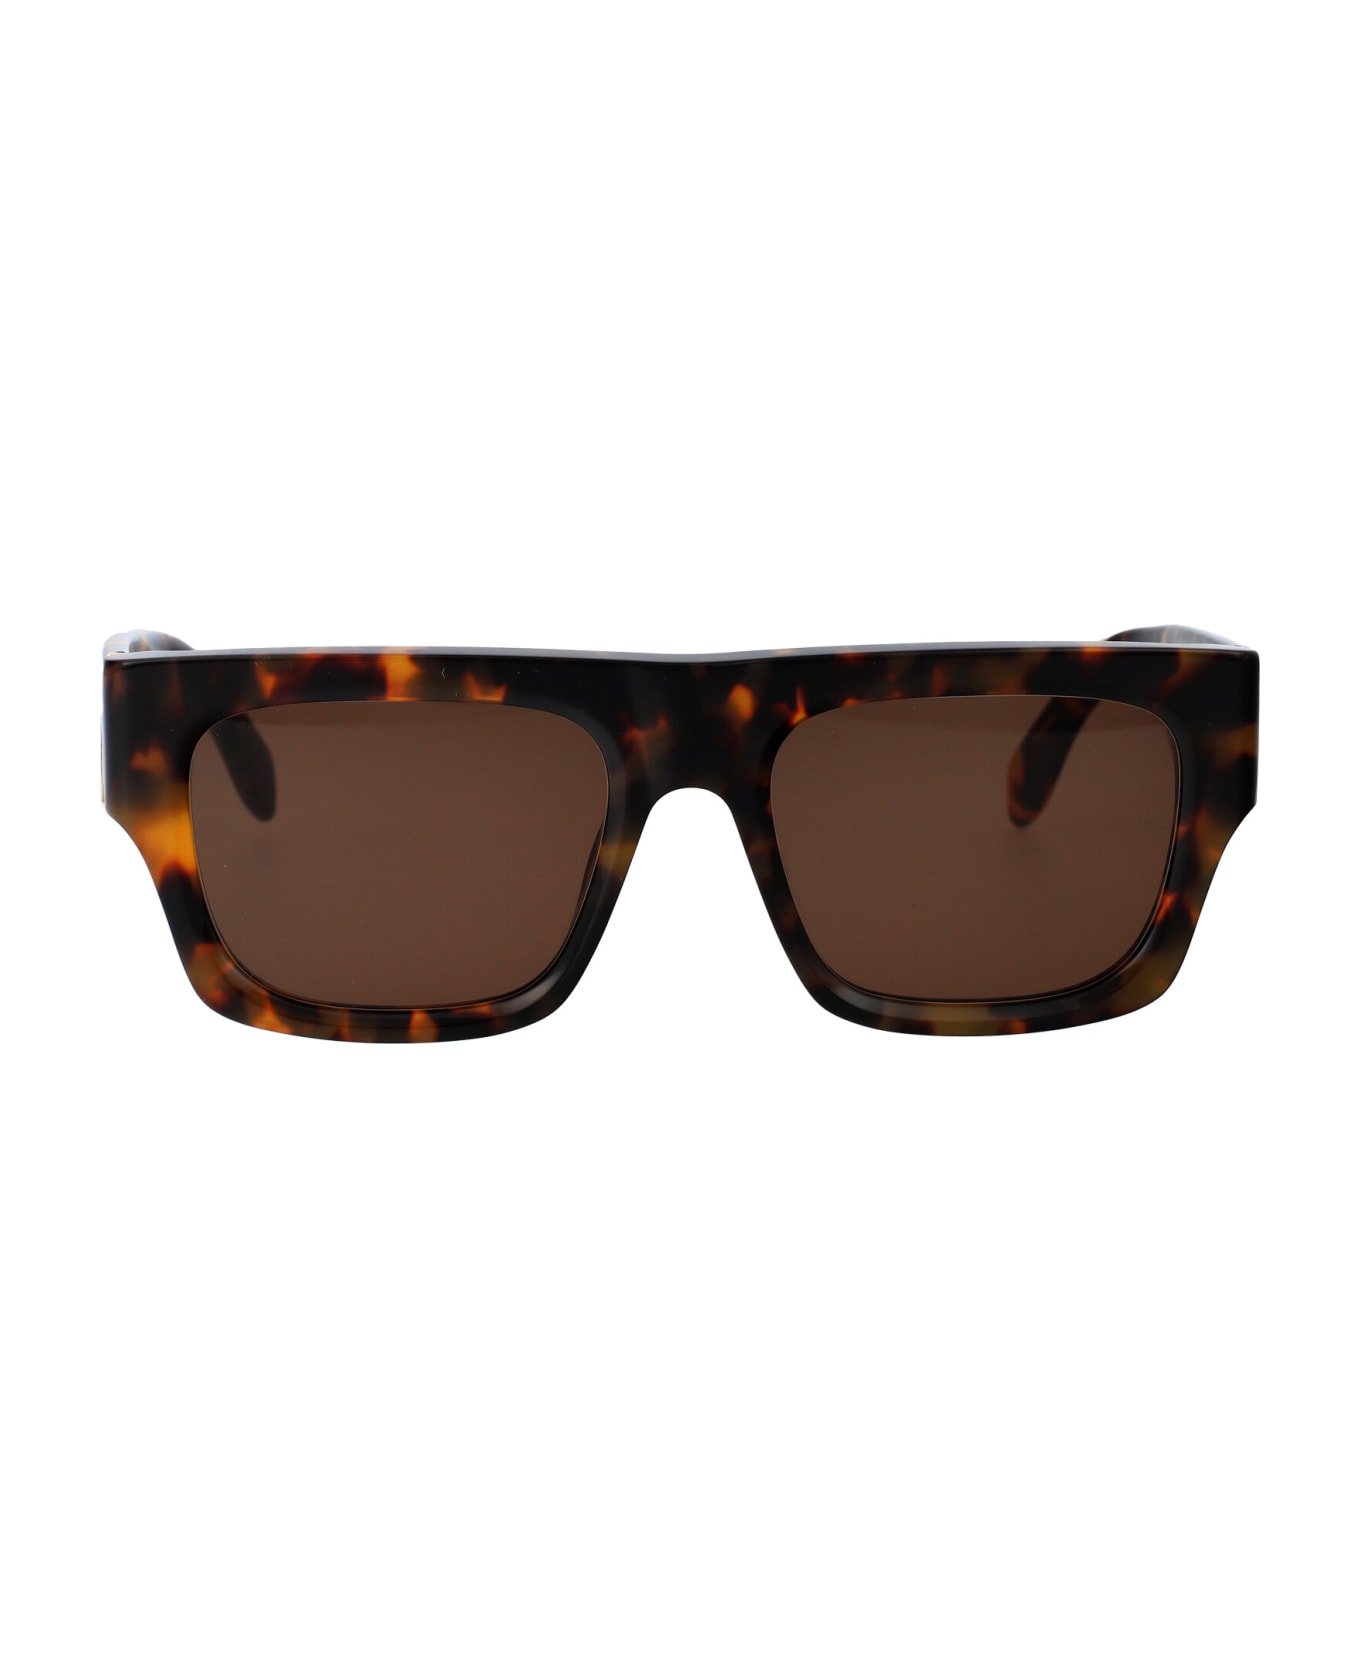 Palm Angels Pixley Sunglasses - 6064 HAVANA サングラス